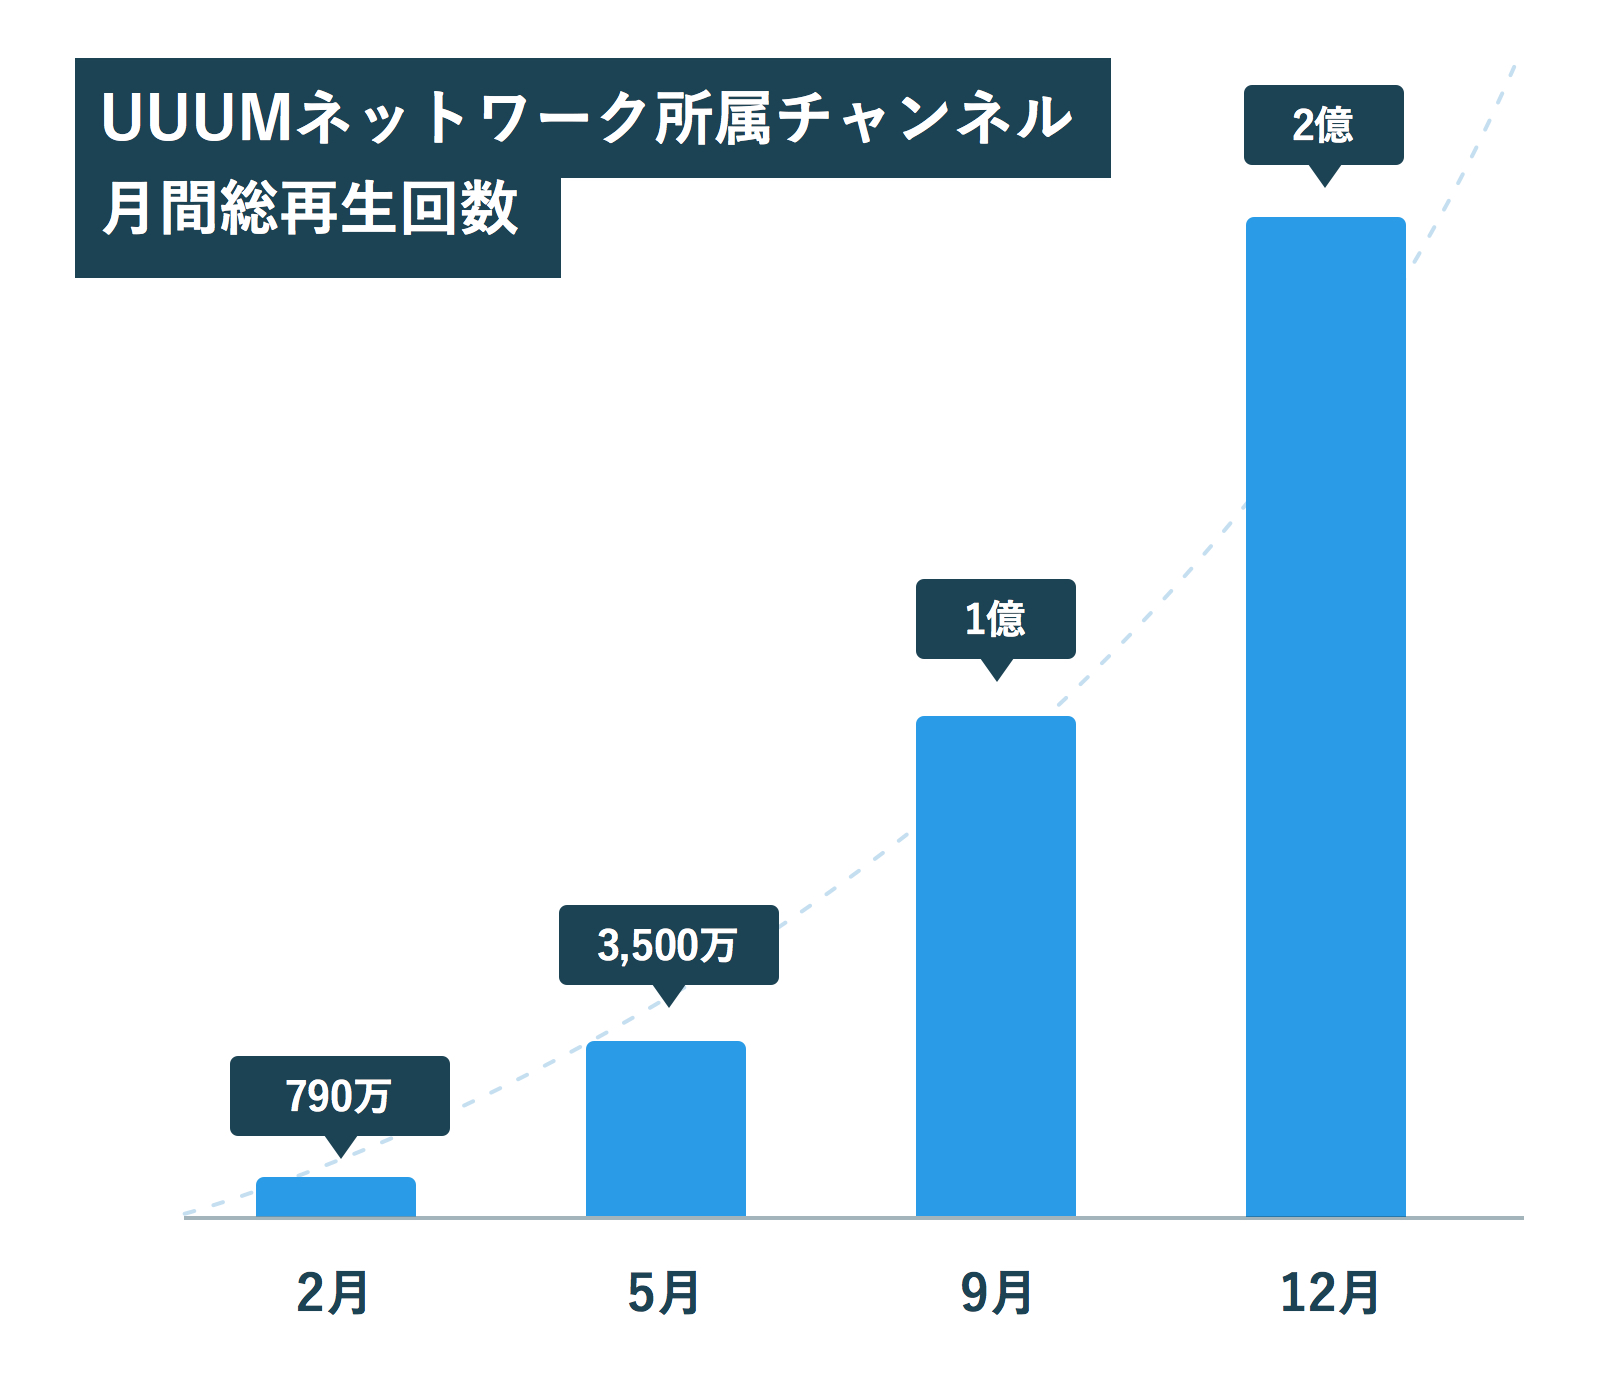 Uuumネットワーク 開始から1年でチャンネル月間総再生回数が2億回を突破 Uuum株式会社のプレスリリース